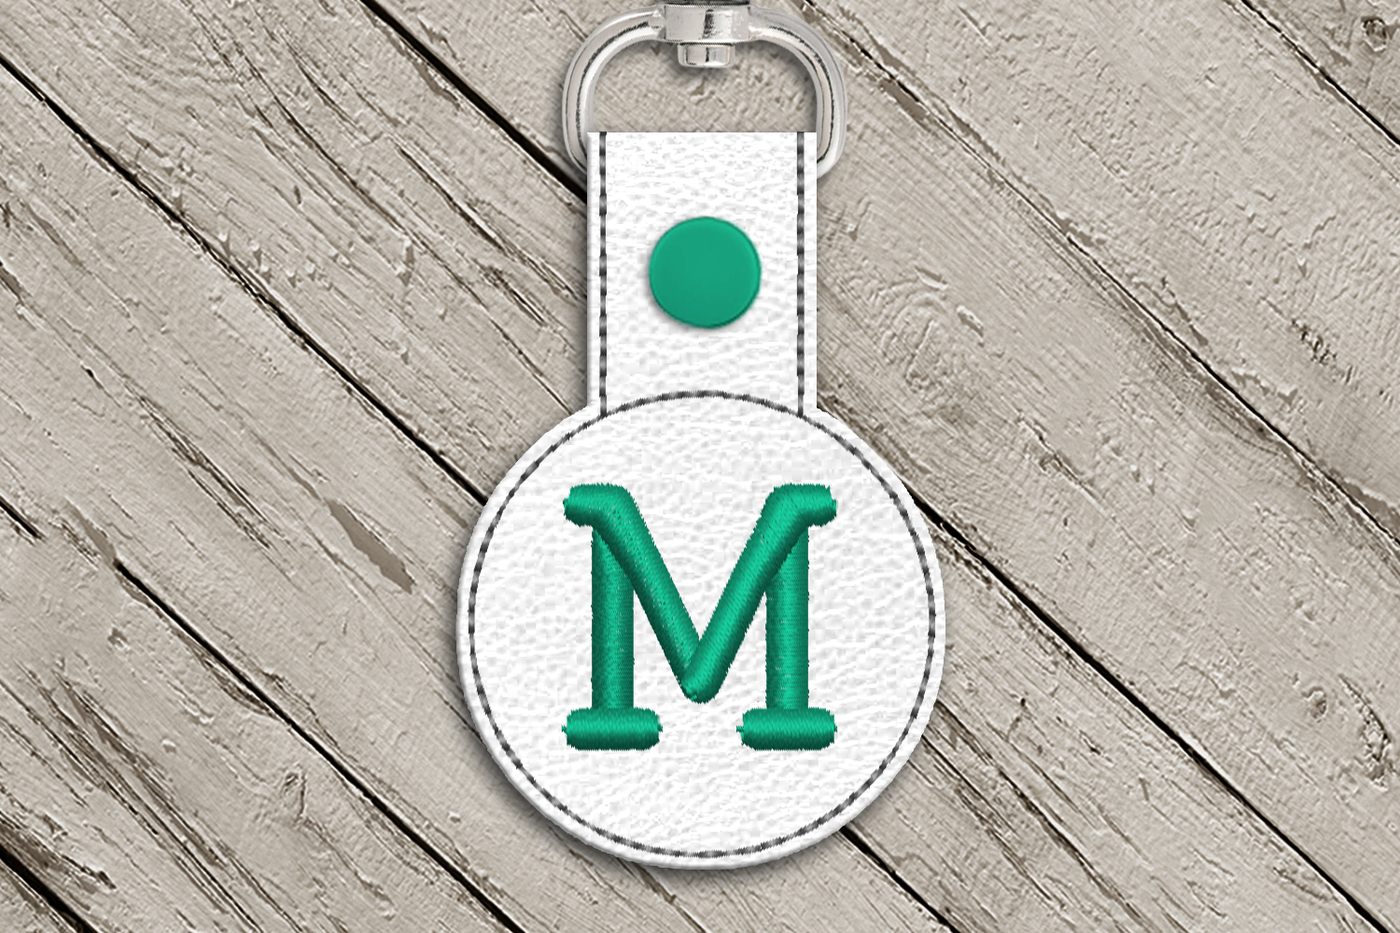 Letter M in the hoop key fob design